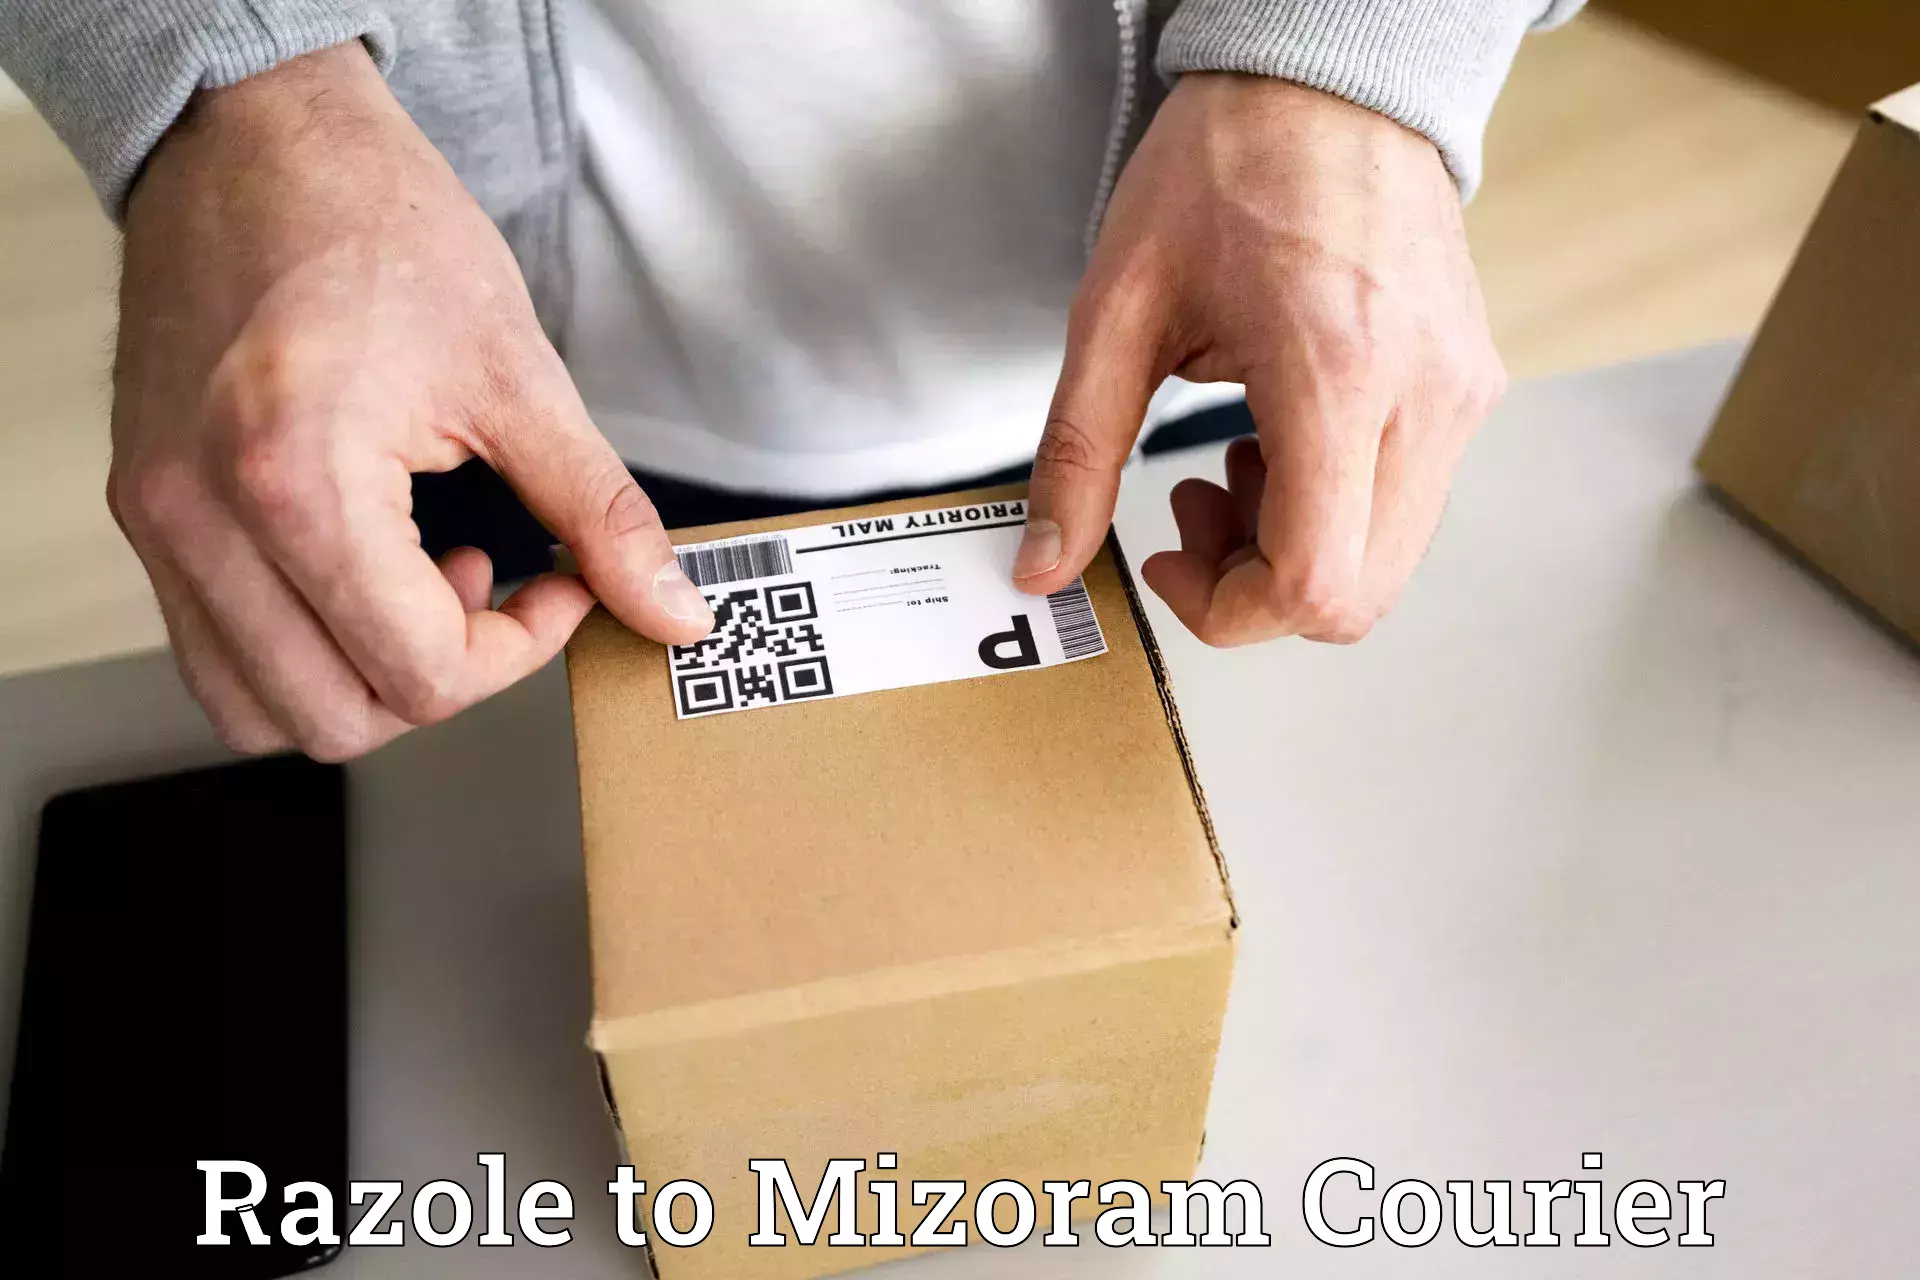 Tracking updates Razole to Mizoram